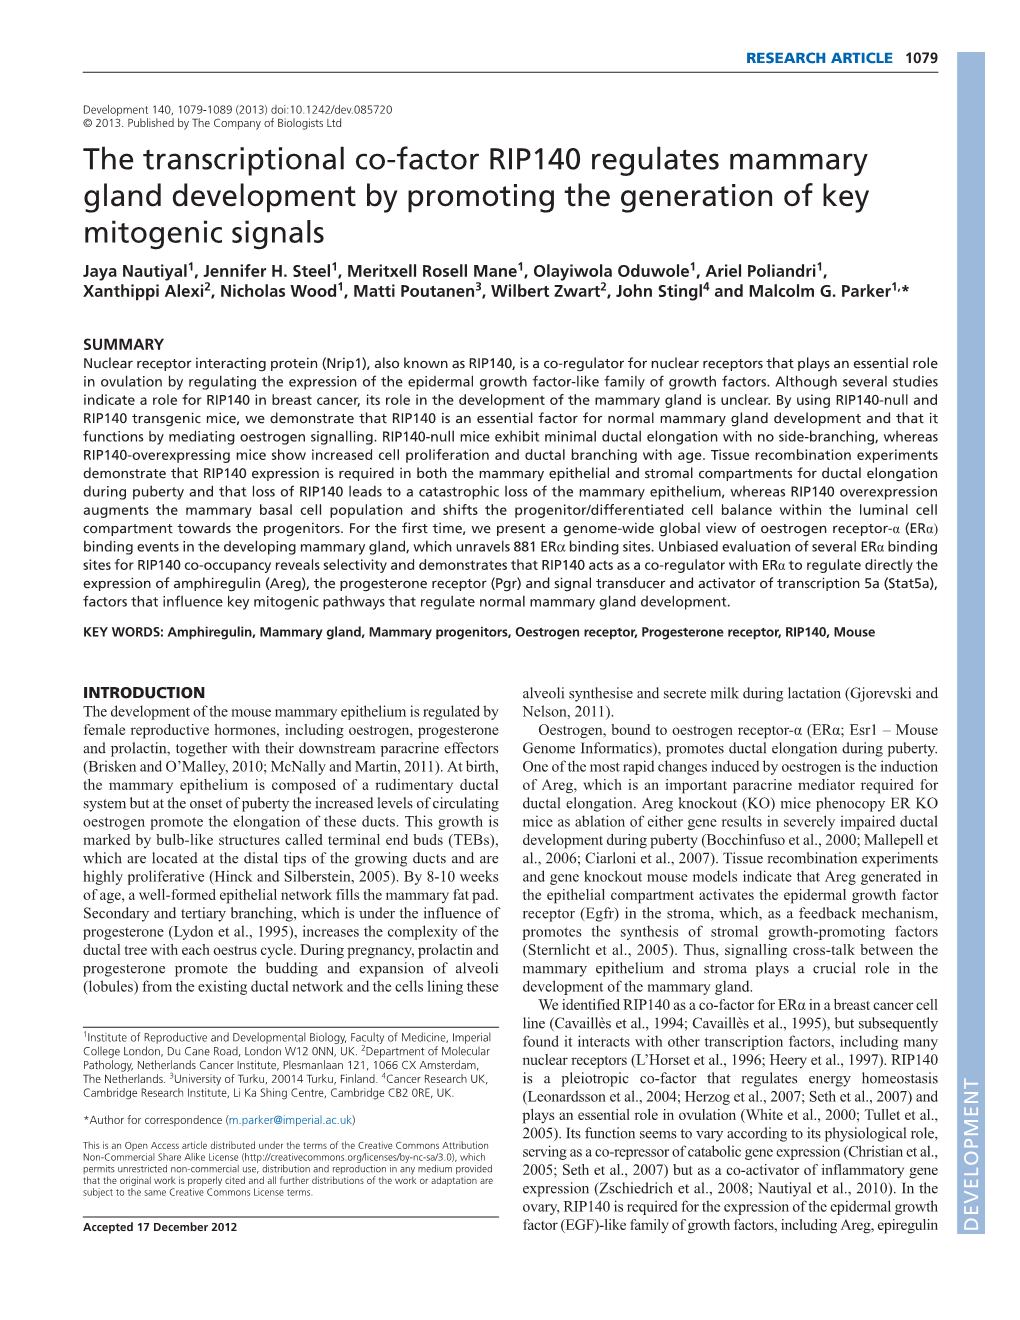 The Transcriptional Co-Factor RIP140 Regulates Mammary Gland Development by Promoting the Generation of Key Mitogenic Signals Jaya Nautiyal1, Jennifer H